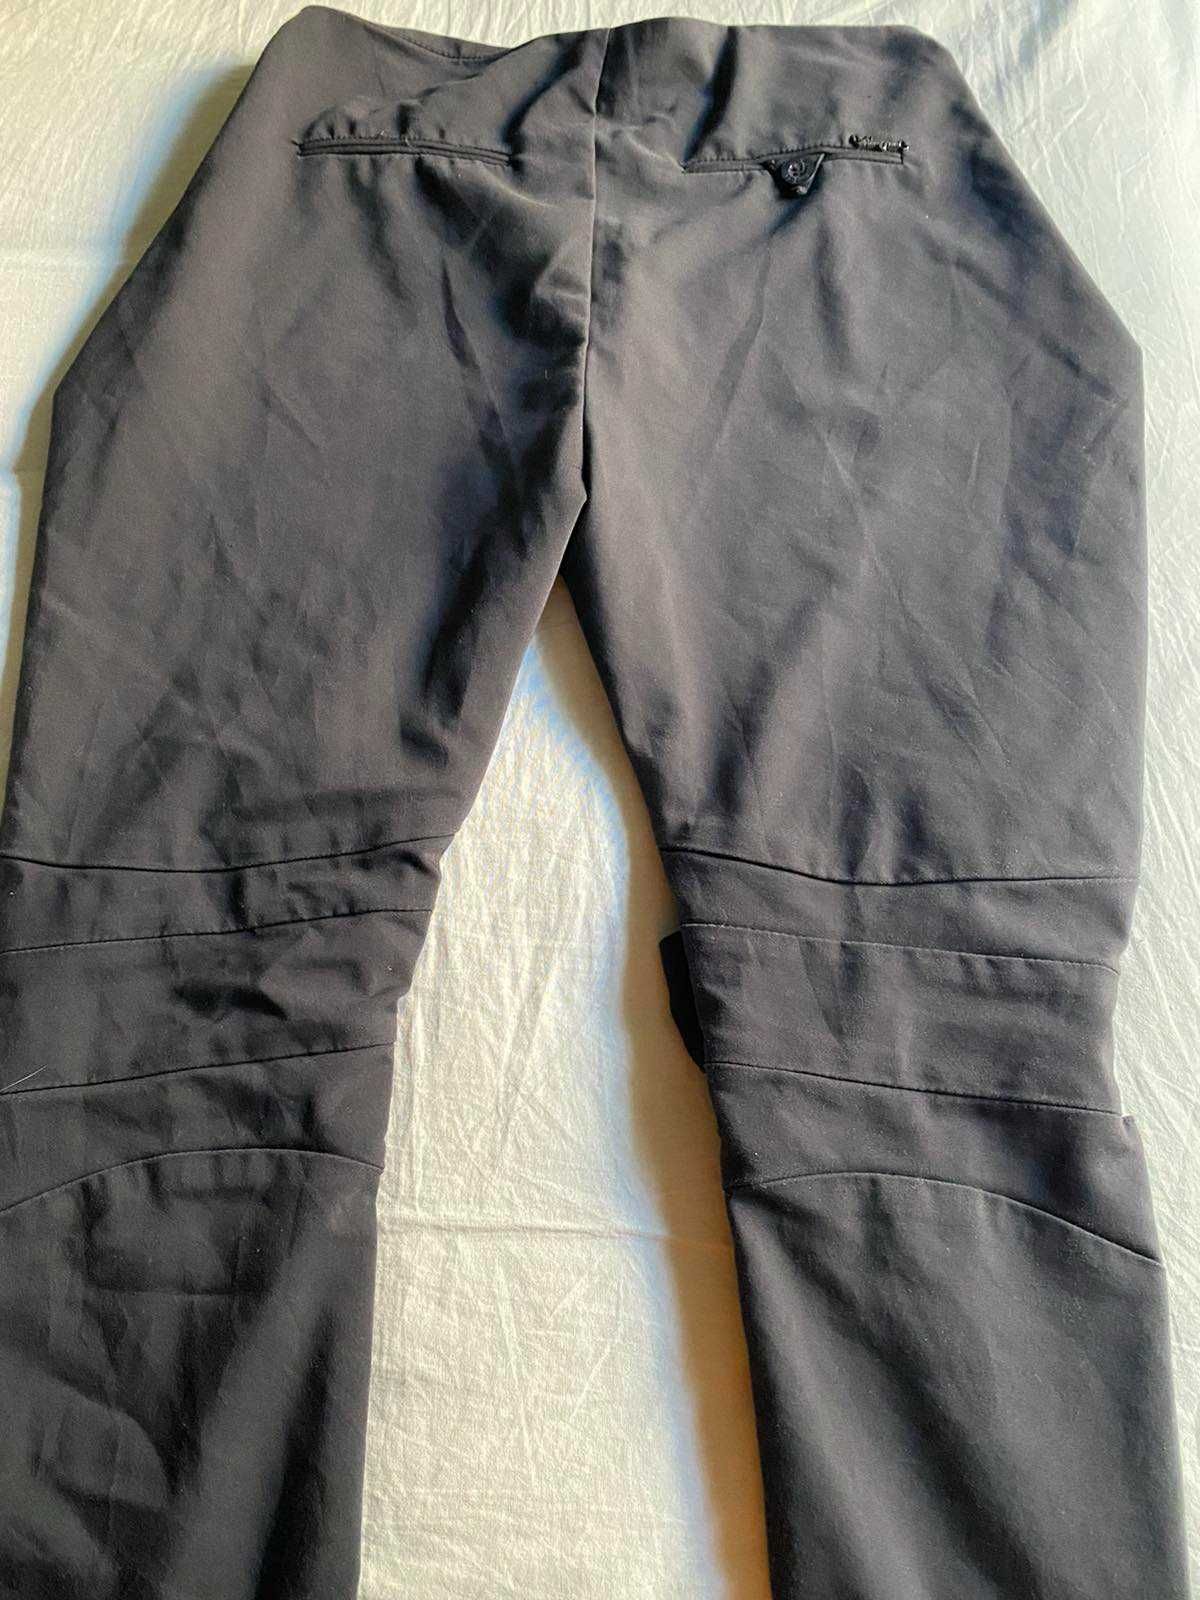 Дамски панталони Fetish, Pause jeans, Alexander Wang, Khujo